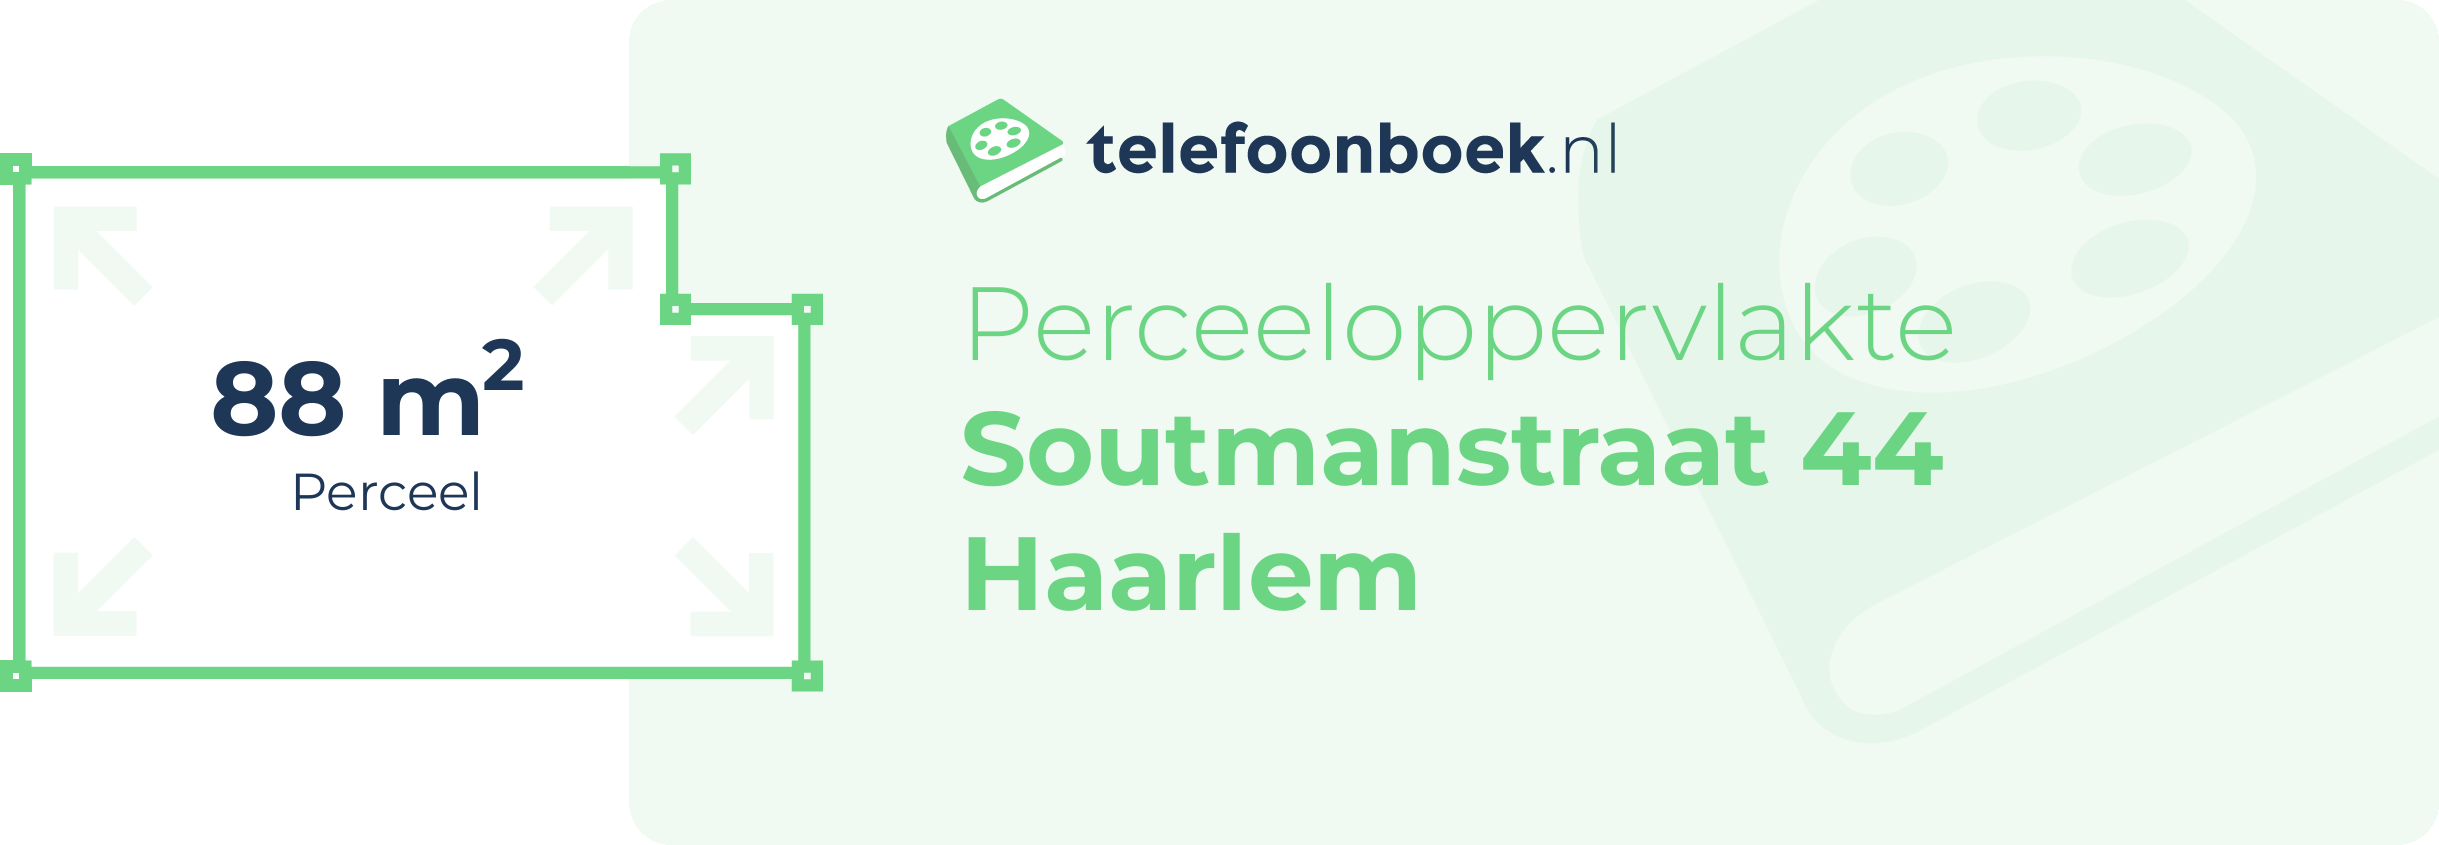 Perceeloppervlakte Soutmanstraat 44 Haarlem